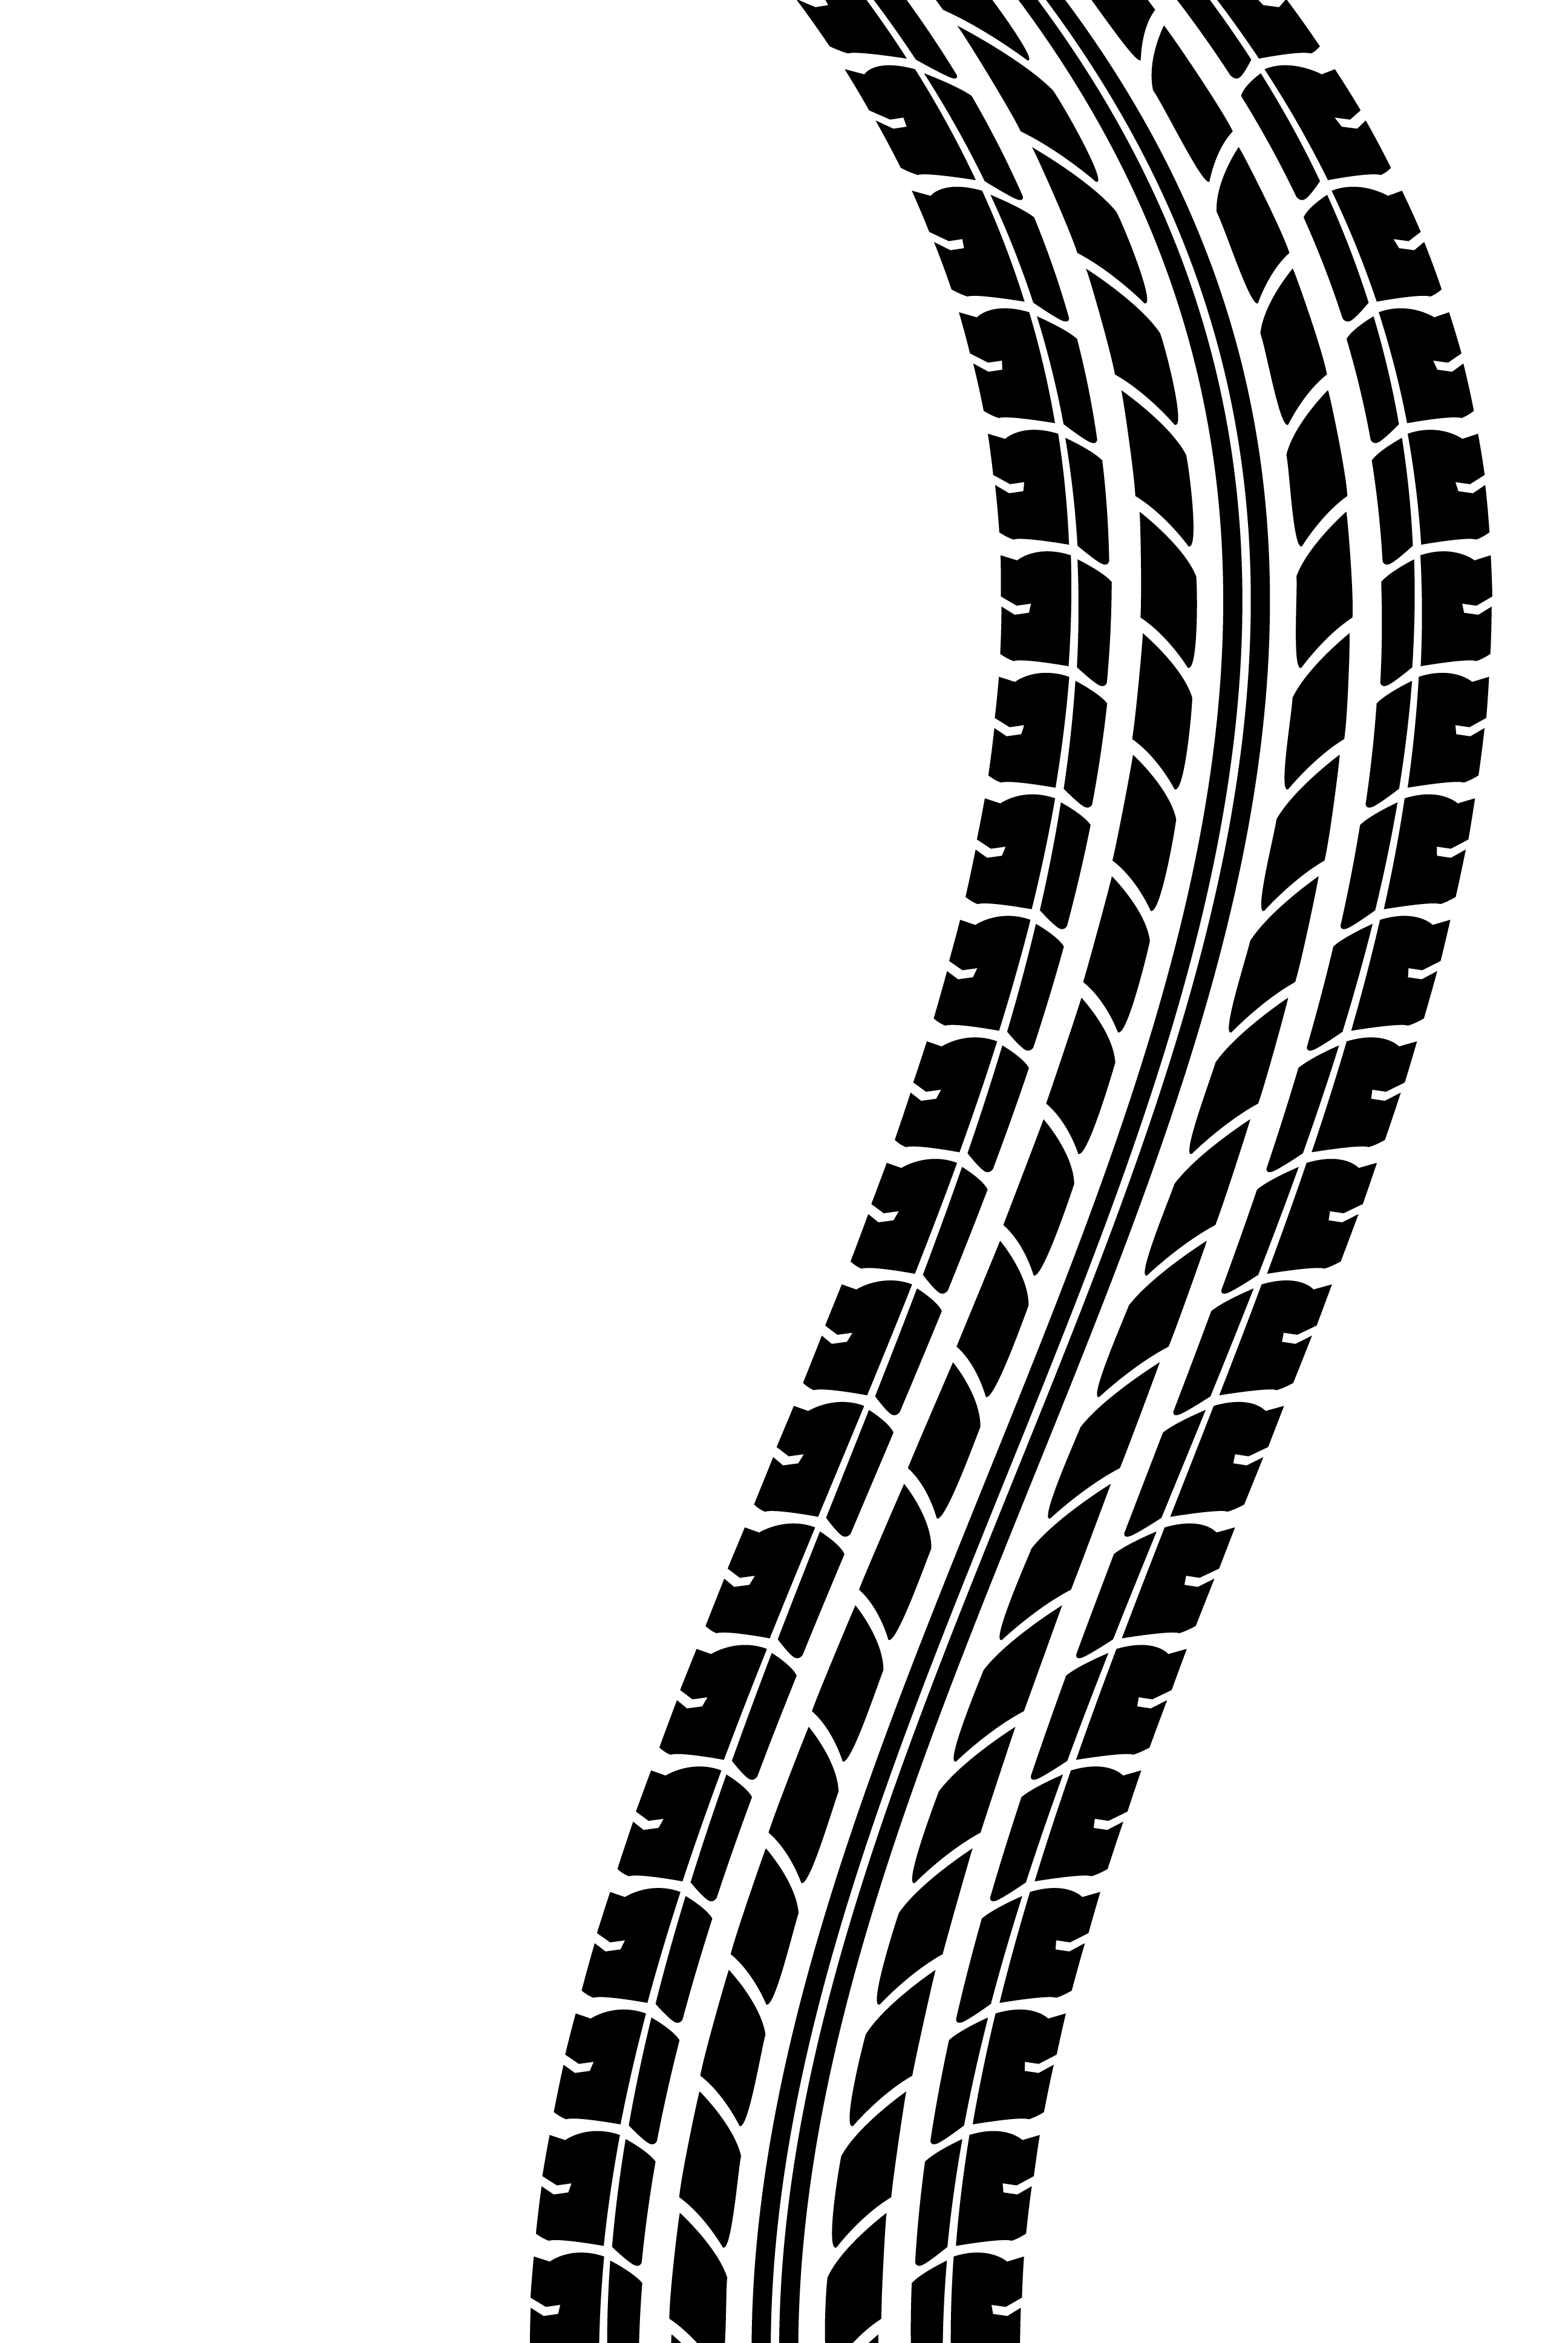 Tire Tracks Vector - Gallery